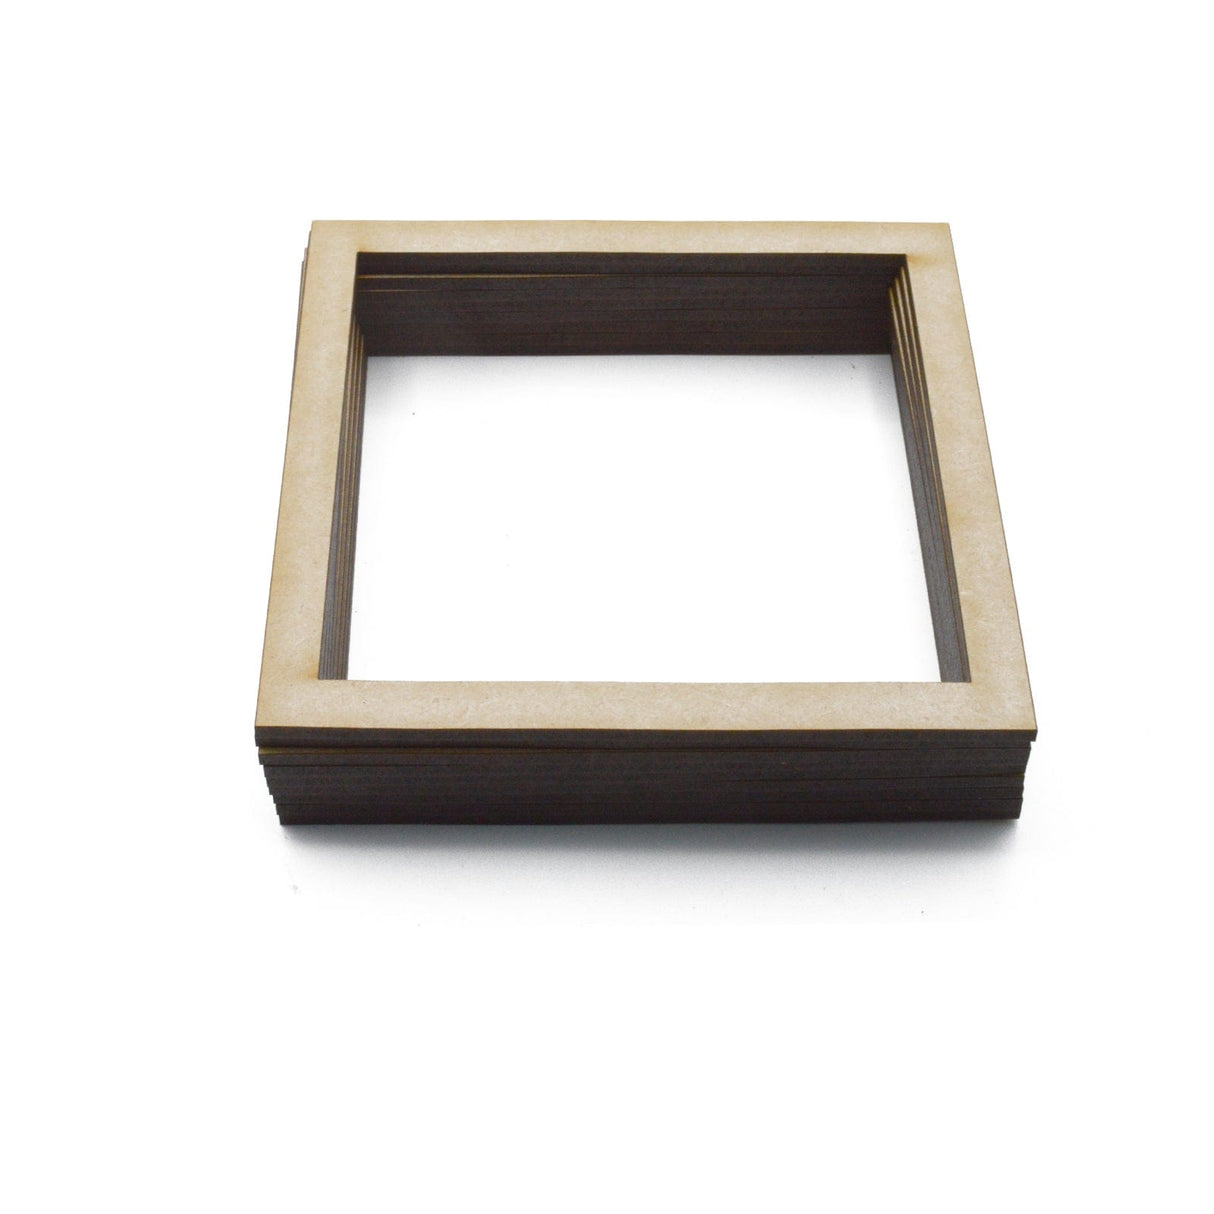 Wooden MDF Square Rings | Mobile Dreamcatcher - Laserworksuk